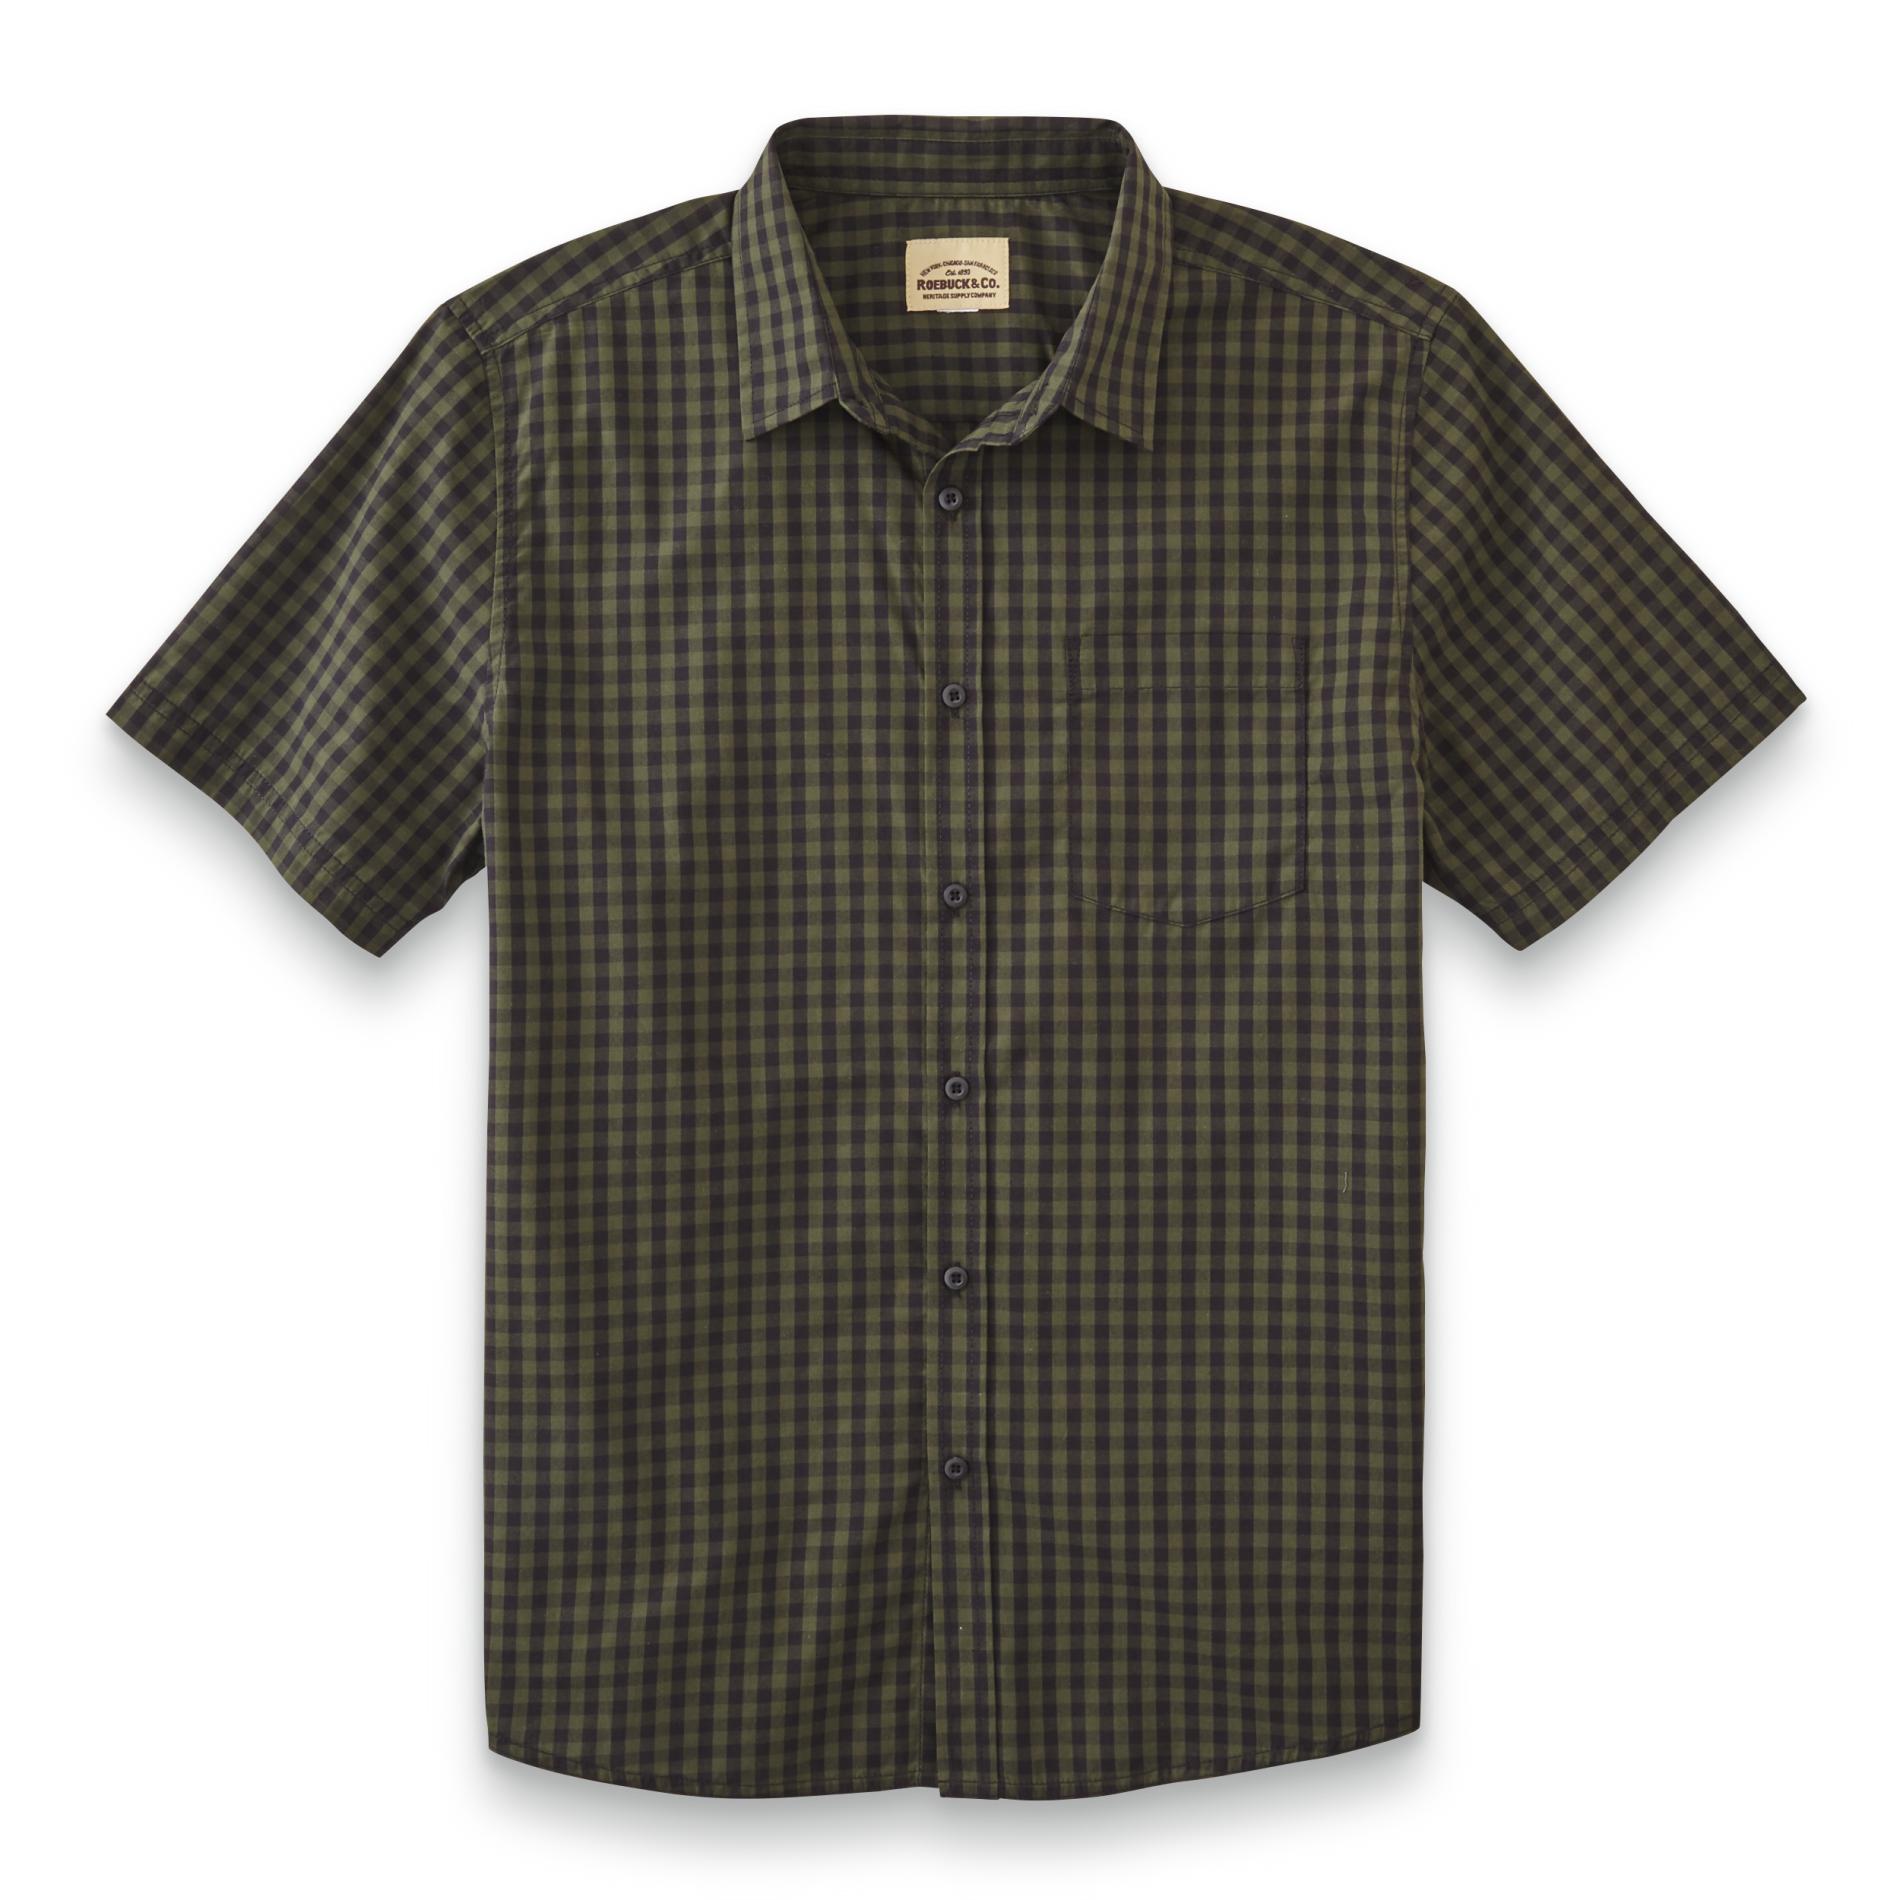 Roebuck & Co. Young Men's Button-Front Shirt - Plaid